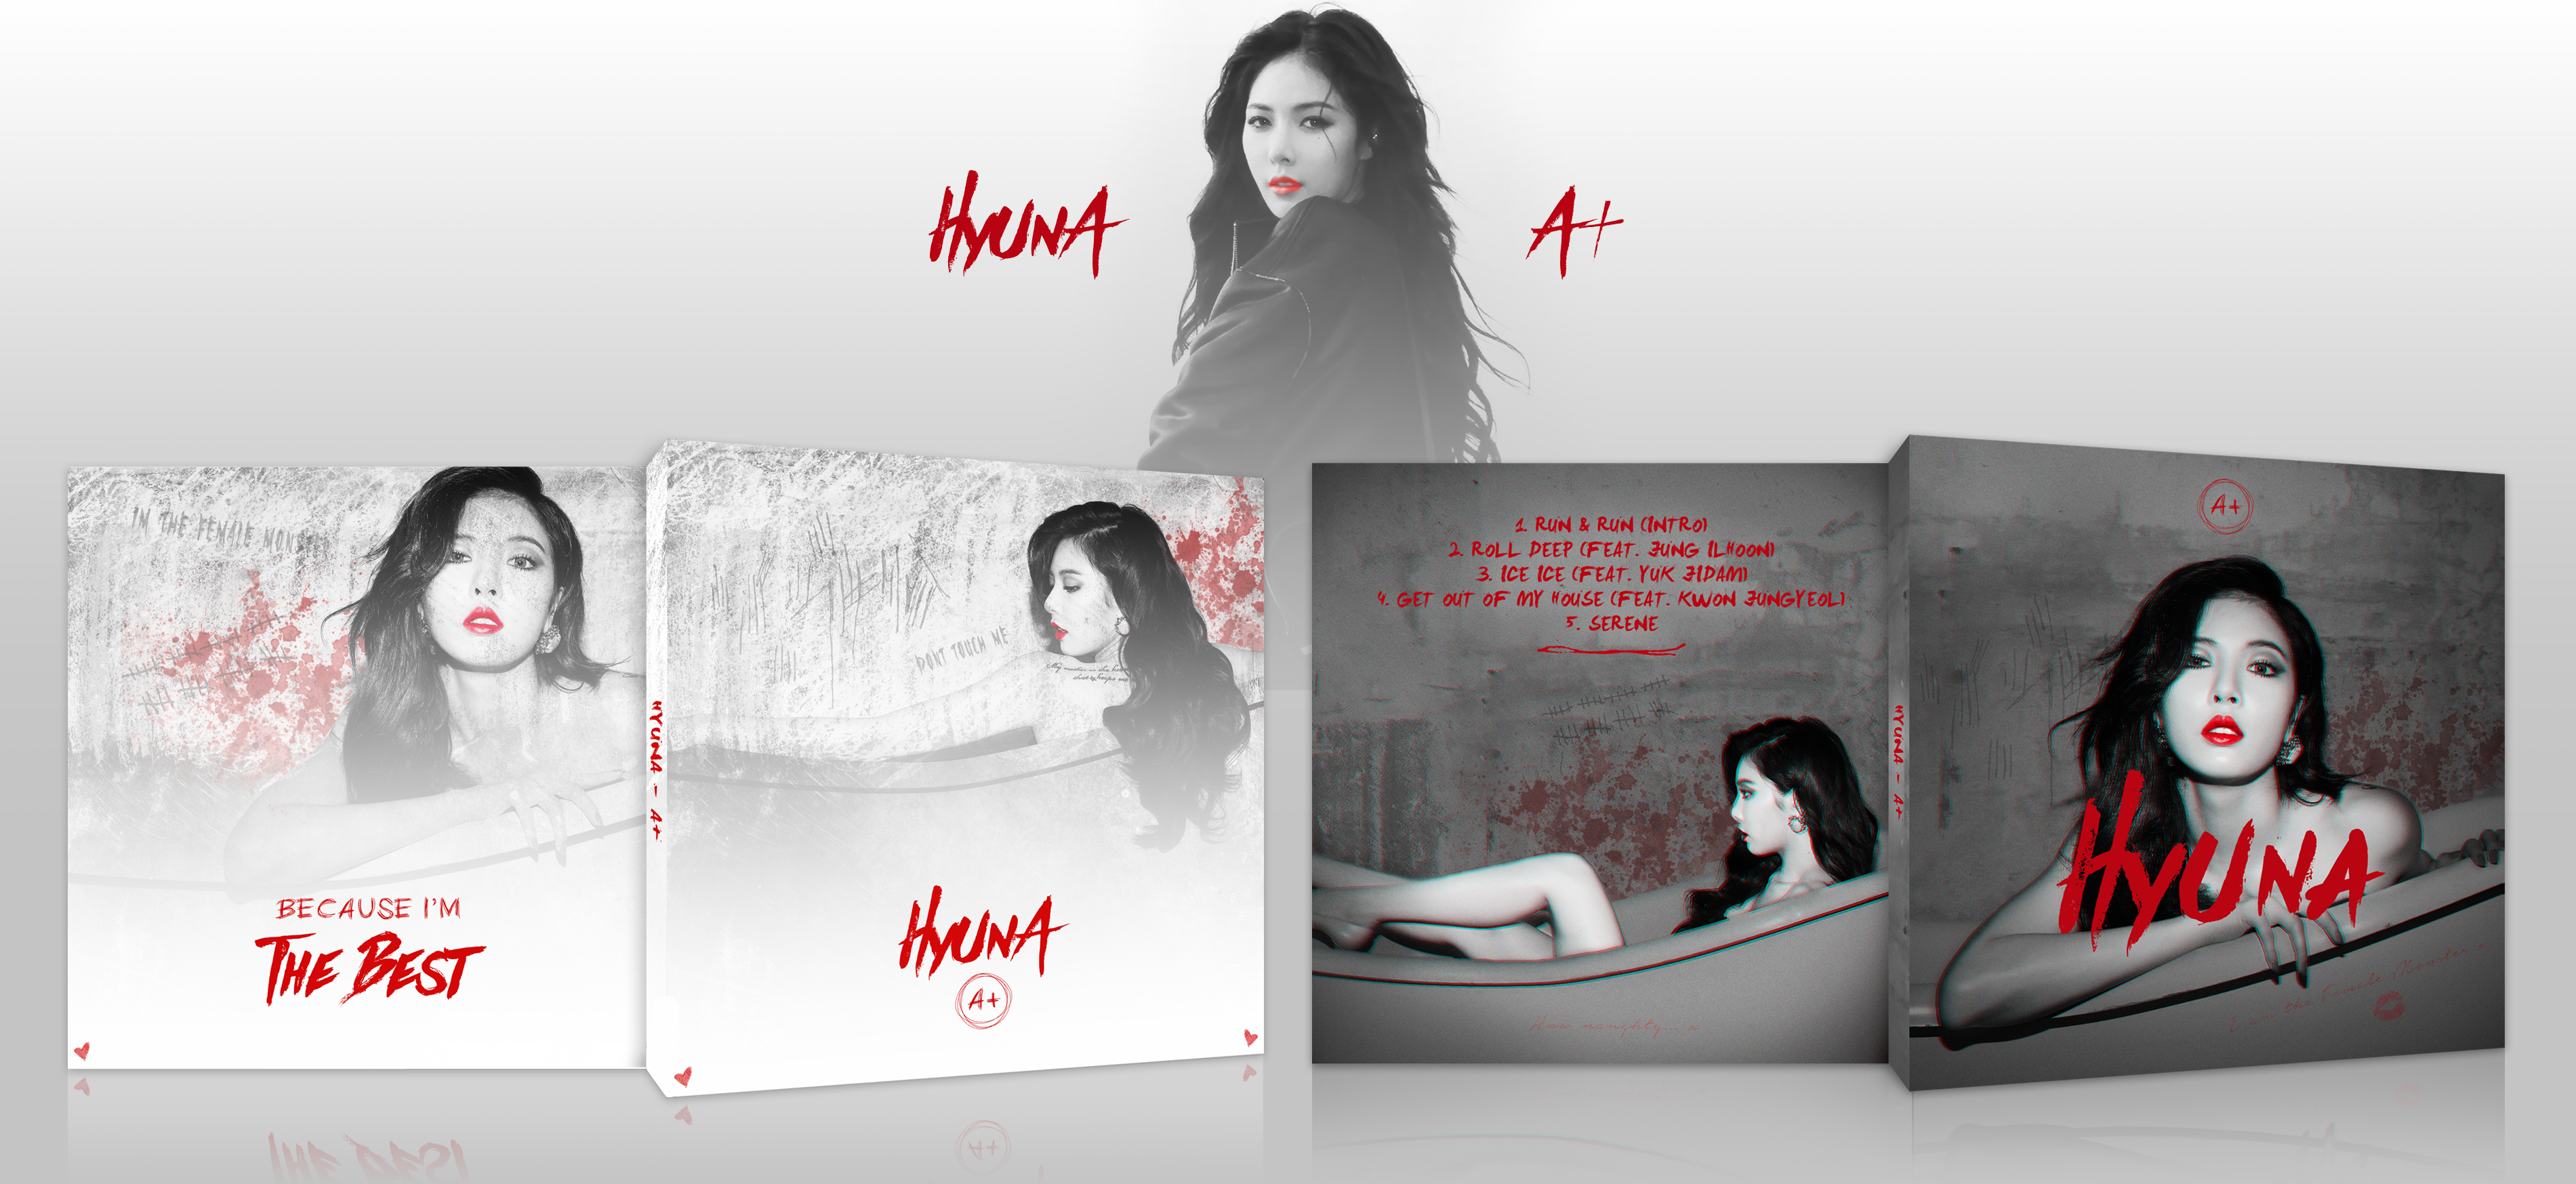 A+ - HyunA box cover